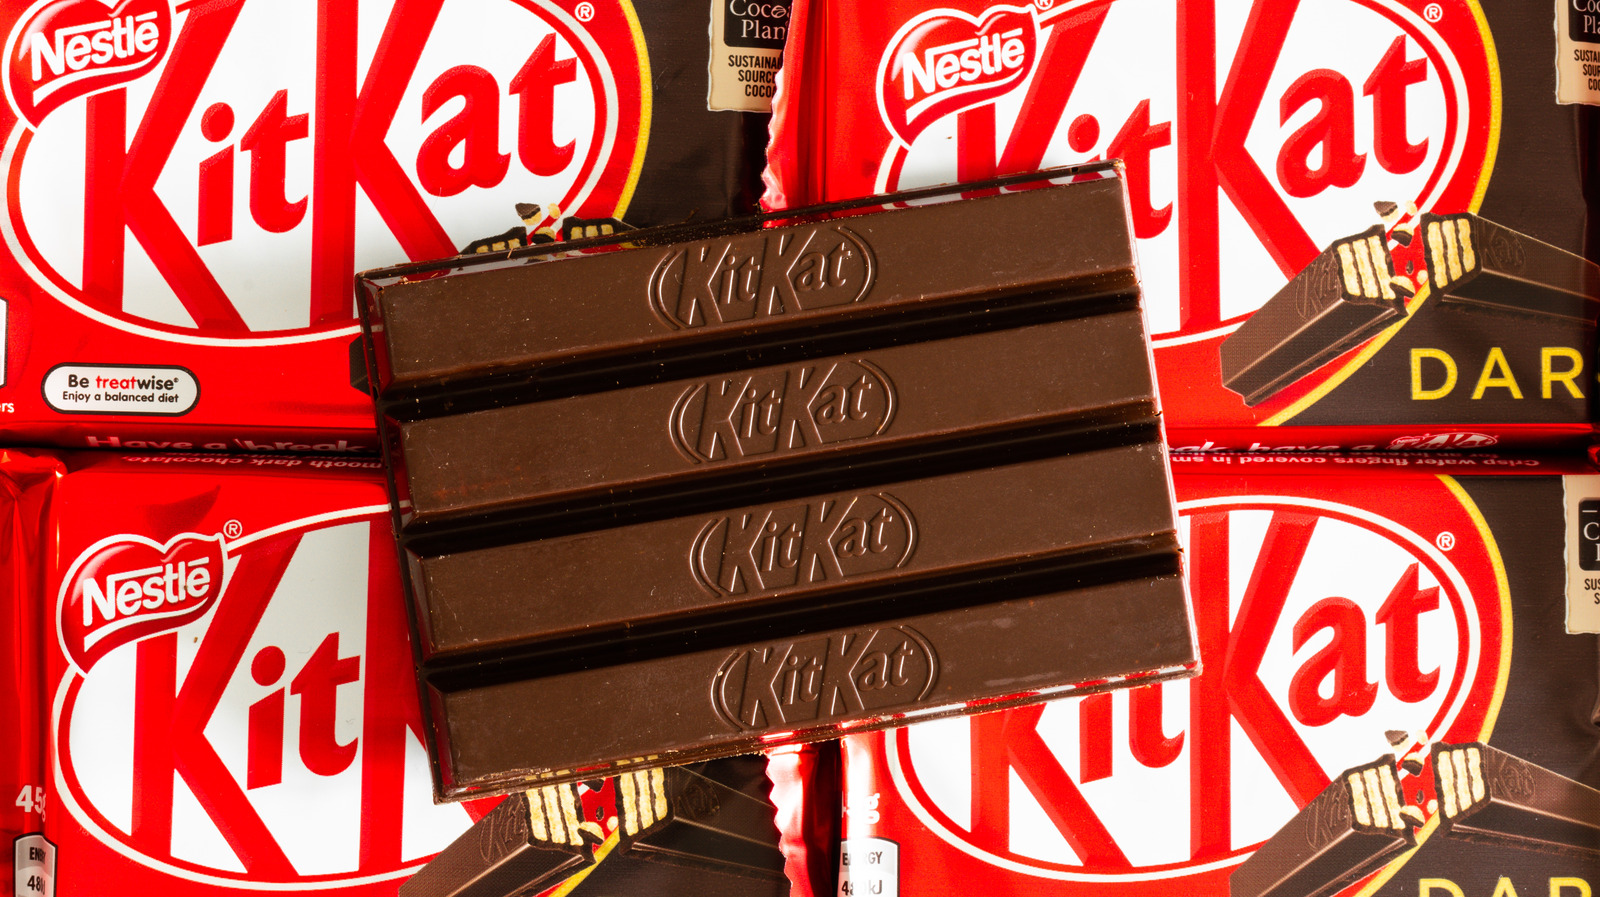 Nestle Kit Kat Original Chocolate Wafer Bars 9 Piece - World Market